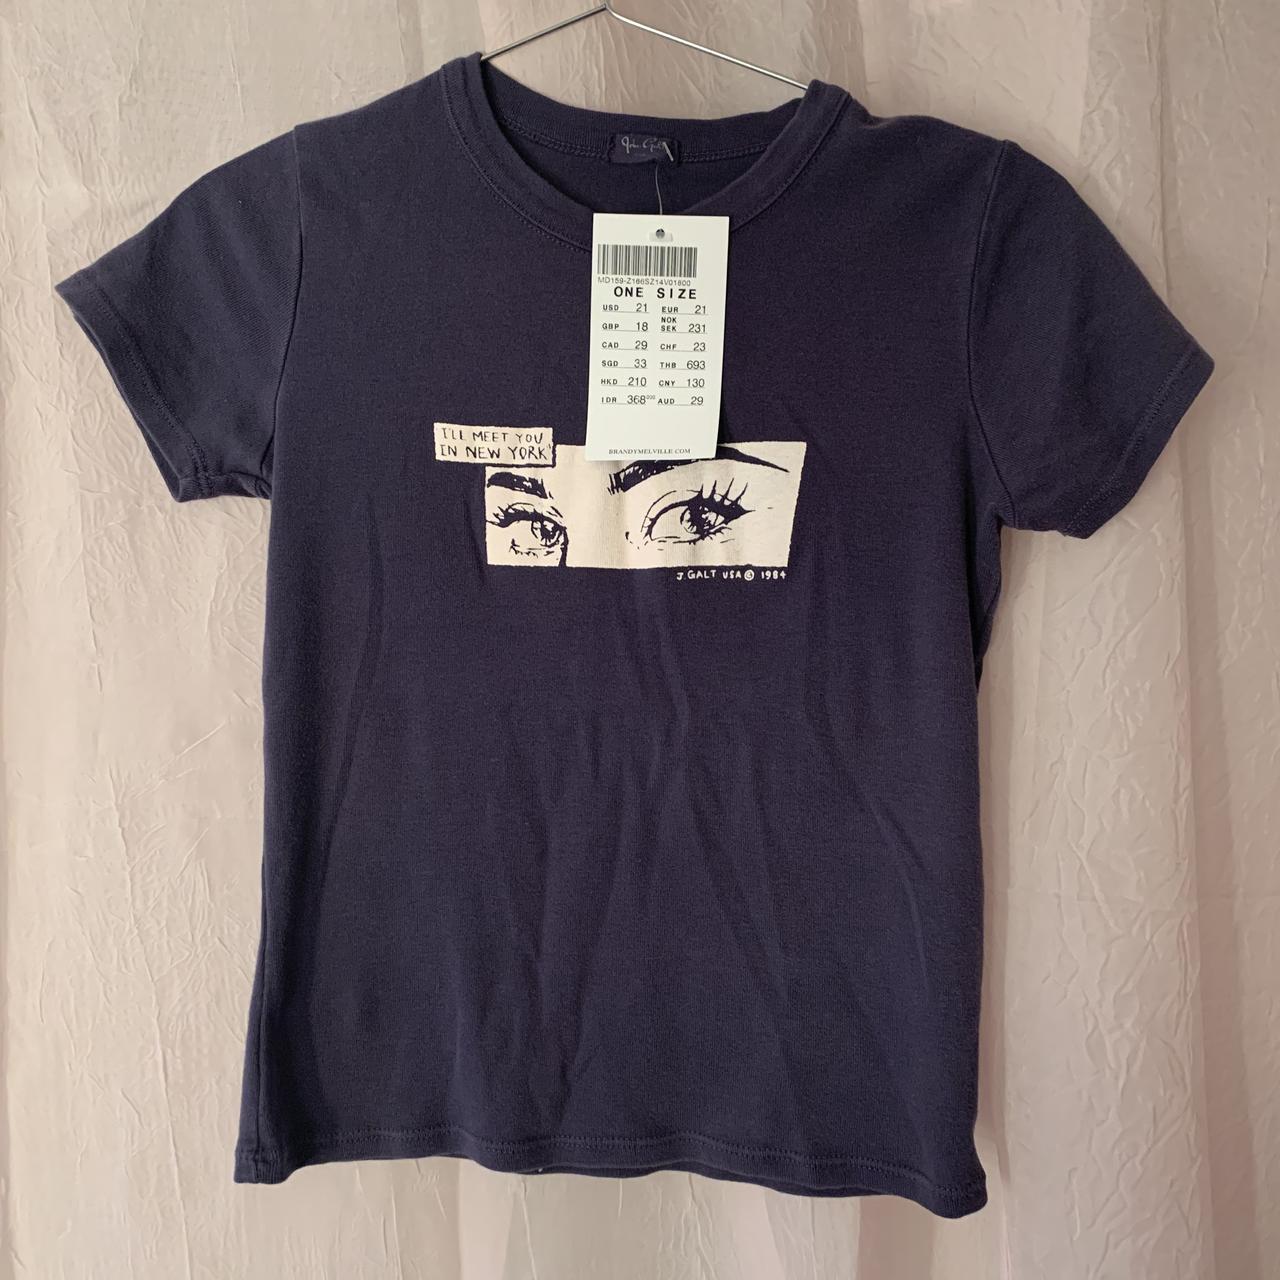 Brandy Melville Eye T-shirts for Women